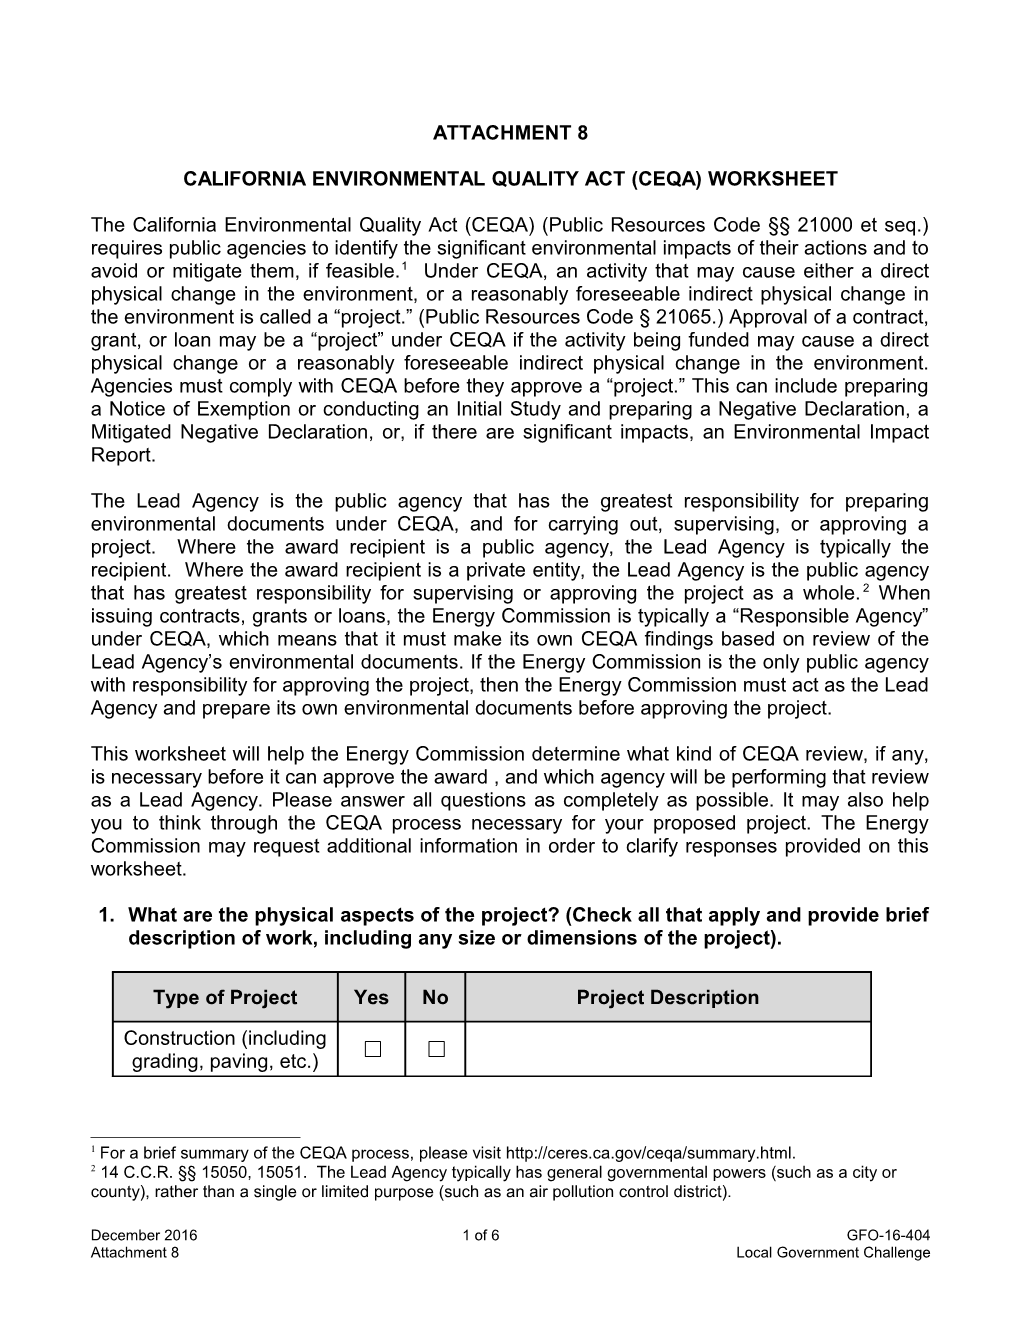 California Environmental Quality Act (Ceqa) Worksheet